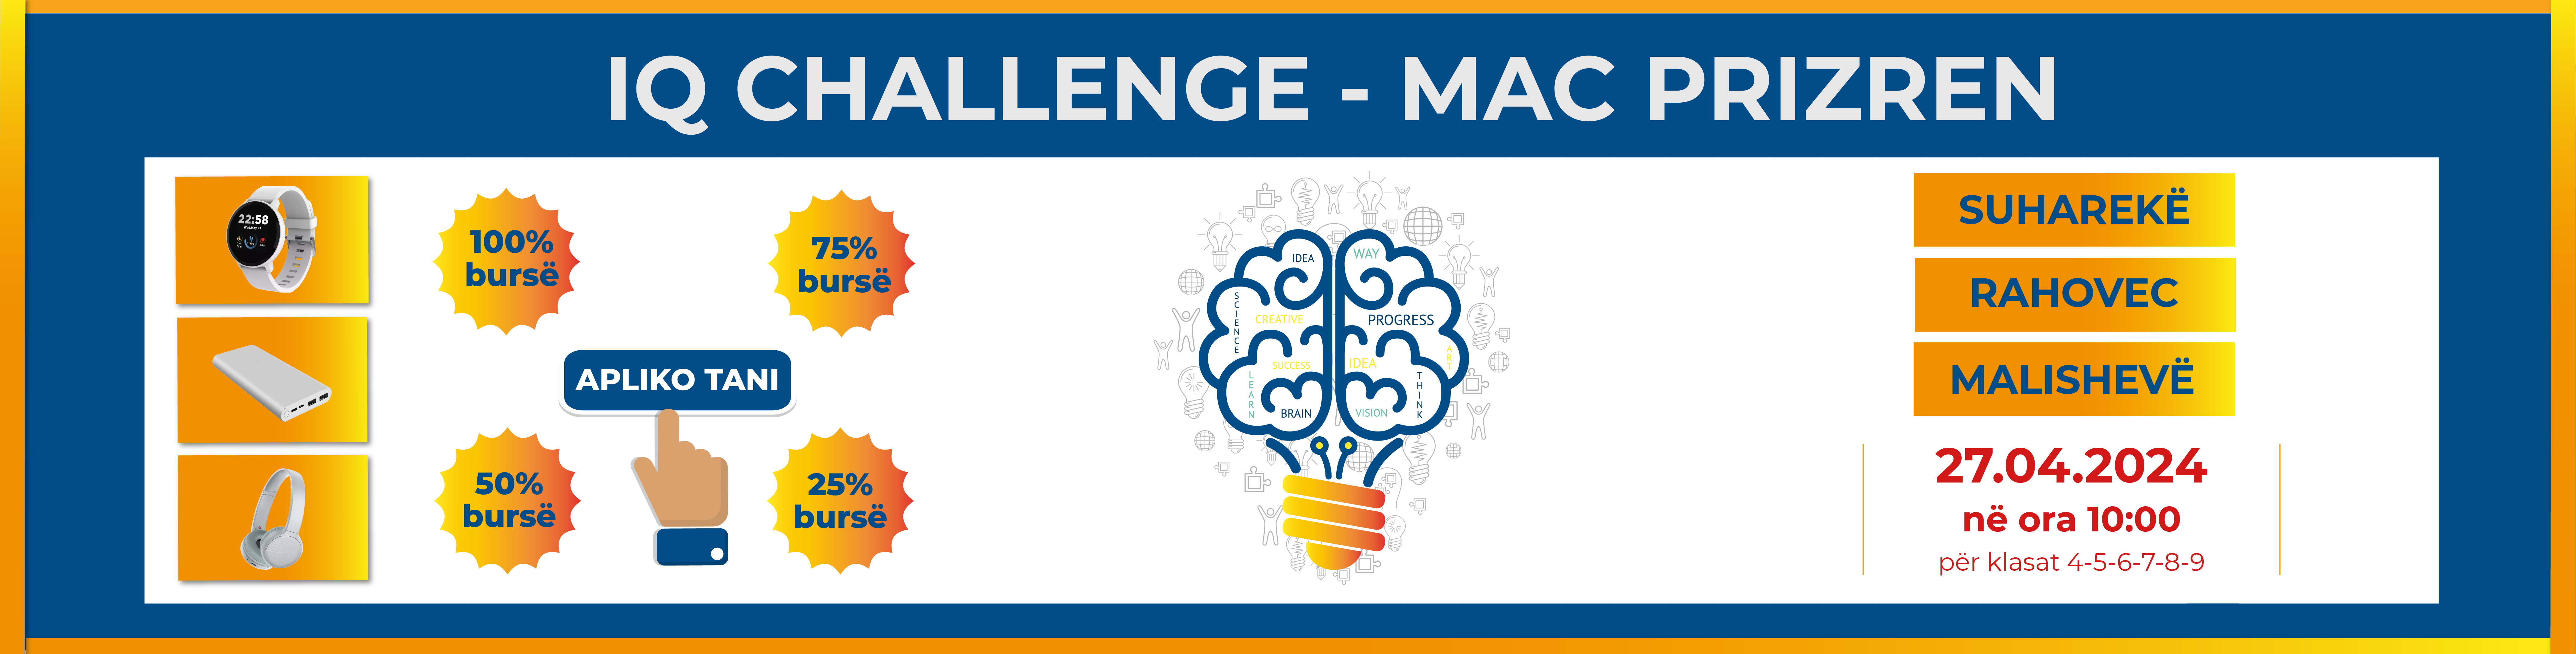 Apply for IQ CHALLENGE - MAC PRIZREN